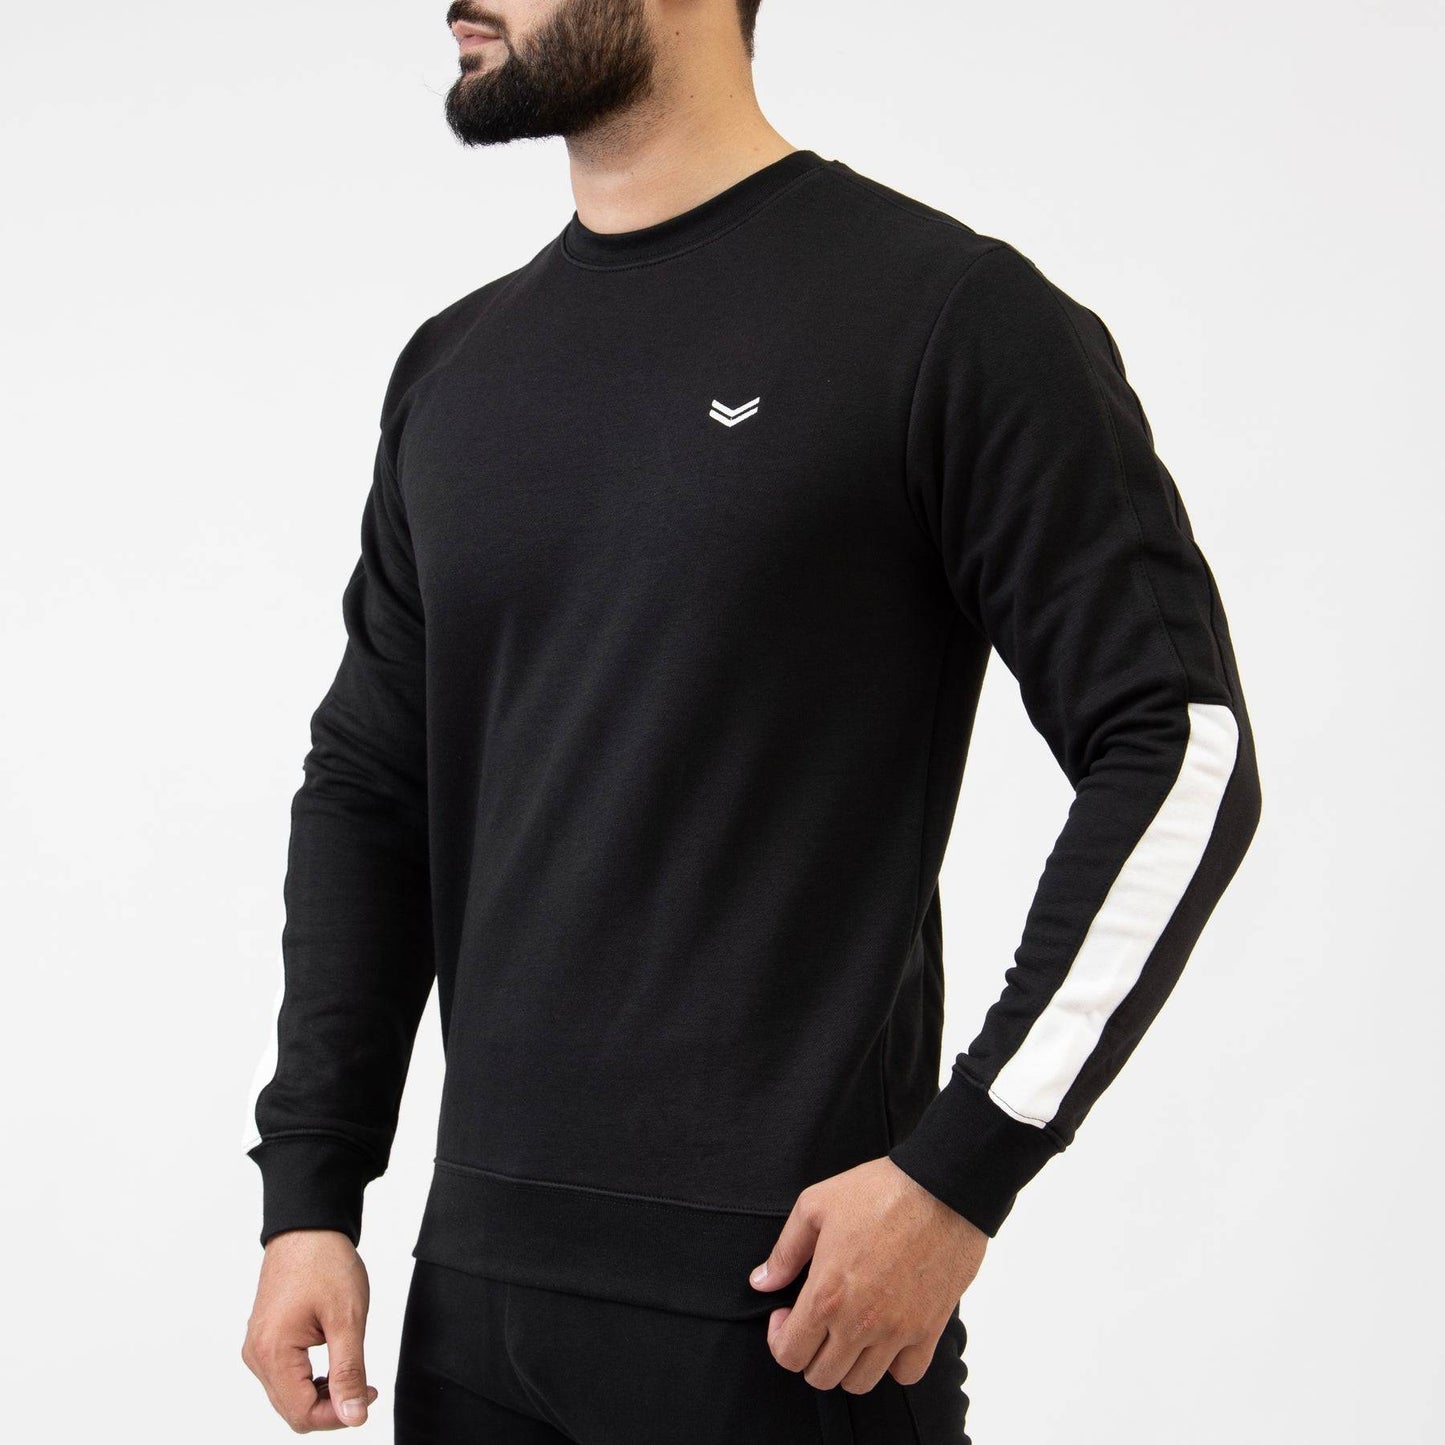 Black Sweatshirt with White Half Panels - Valetica Sports